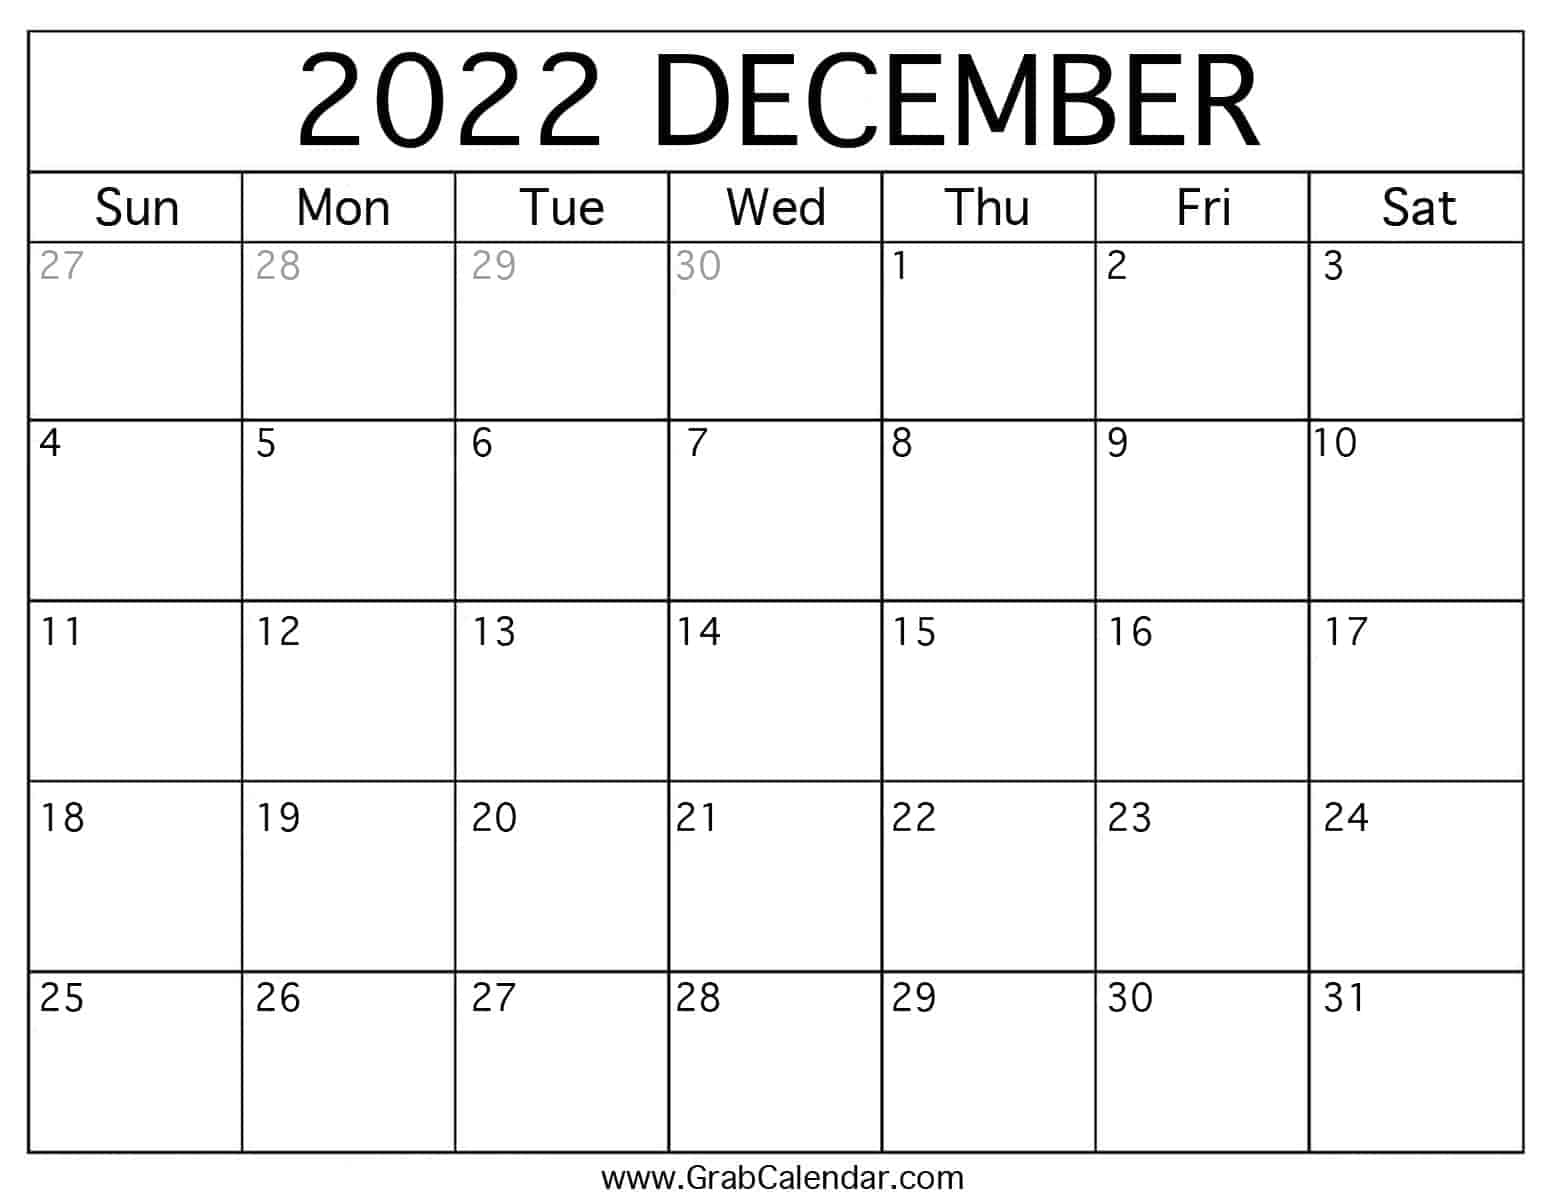 December 2022 Calendar With Holidays Printable December 2022 Calendar